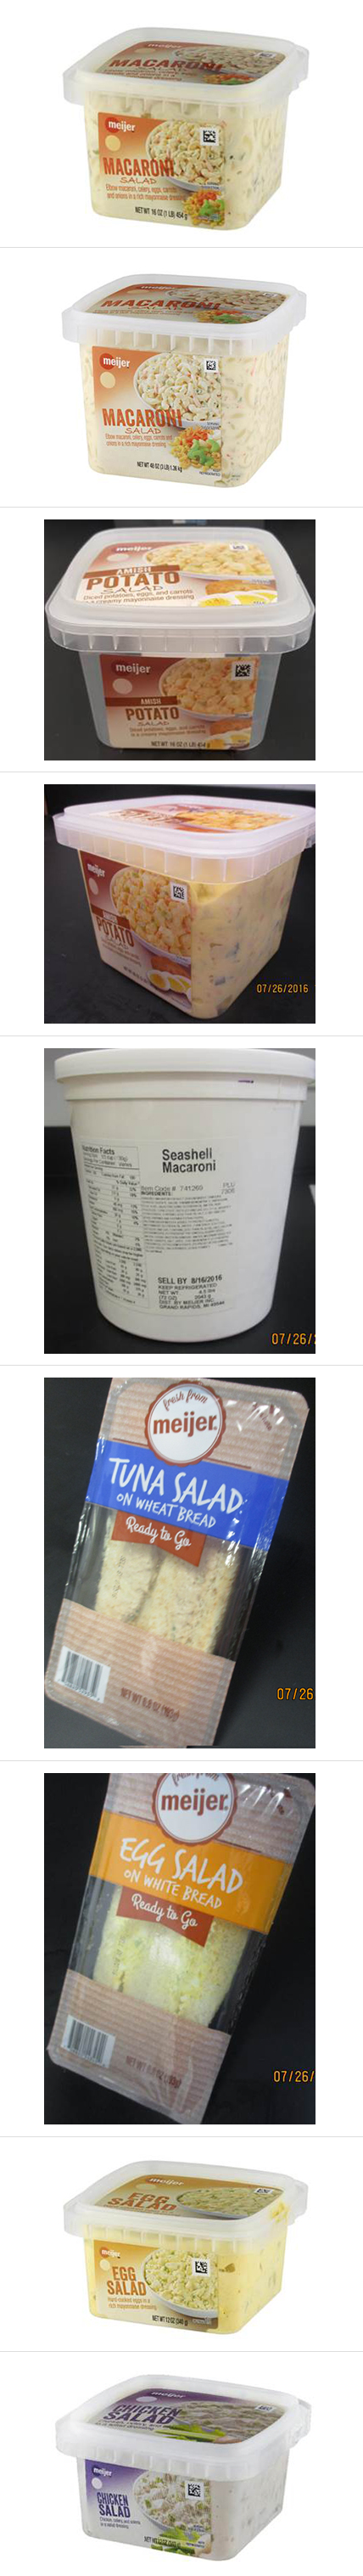 image-meijer-product-recall